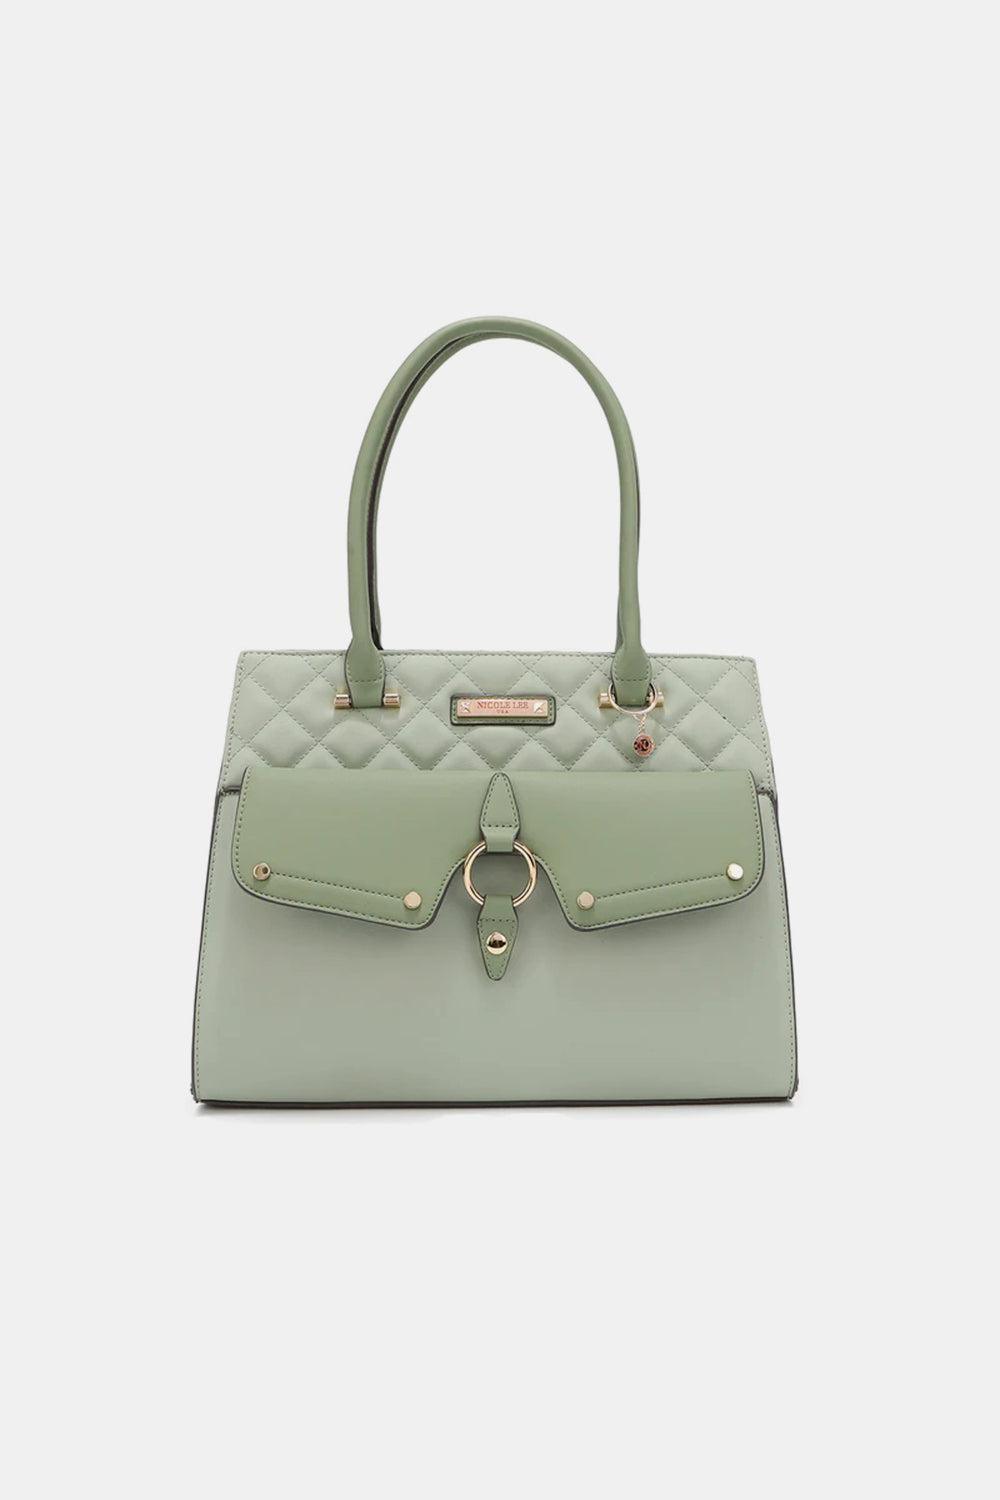 a light green handbag with a metal handle